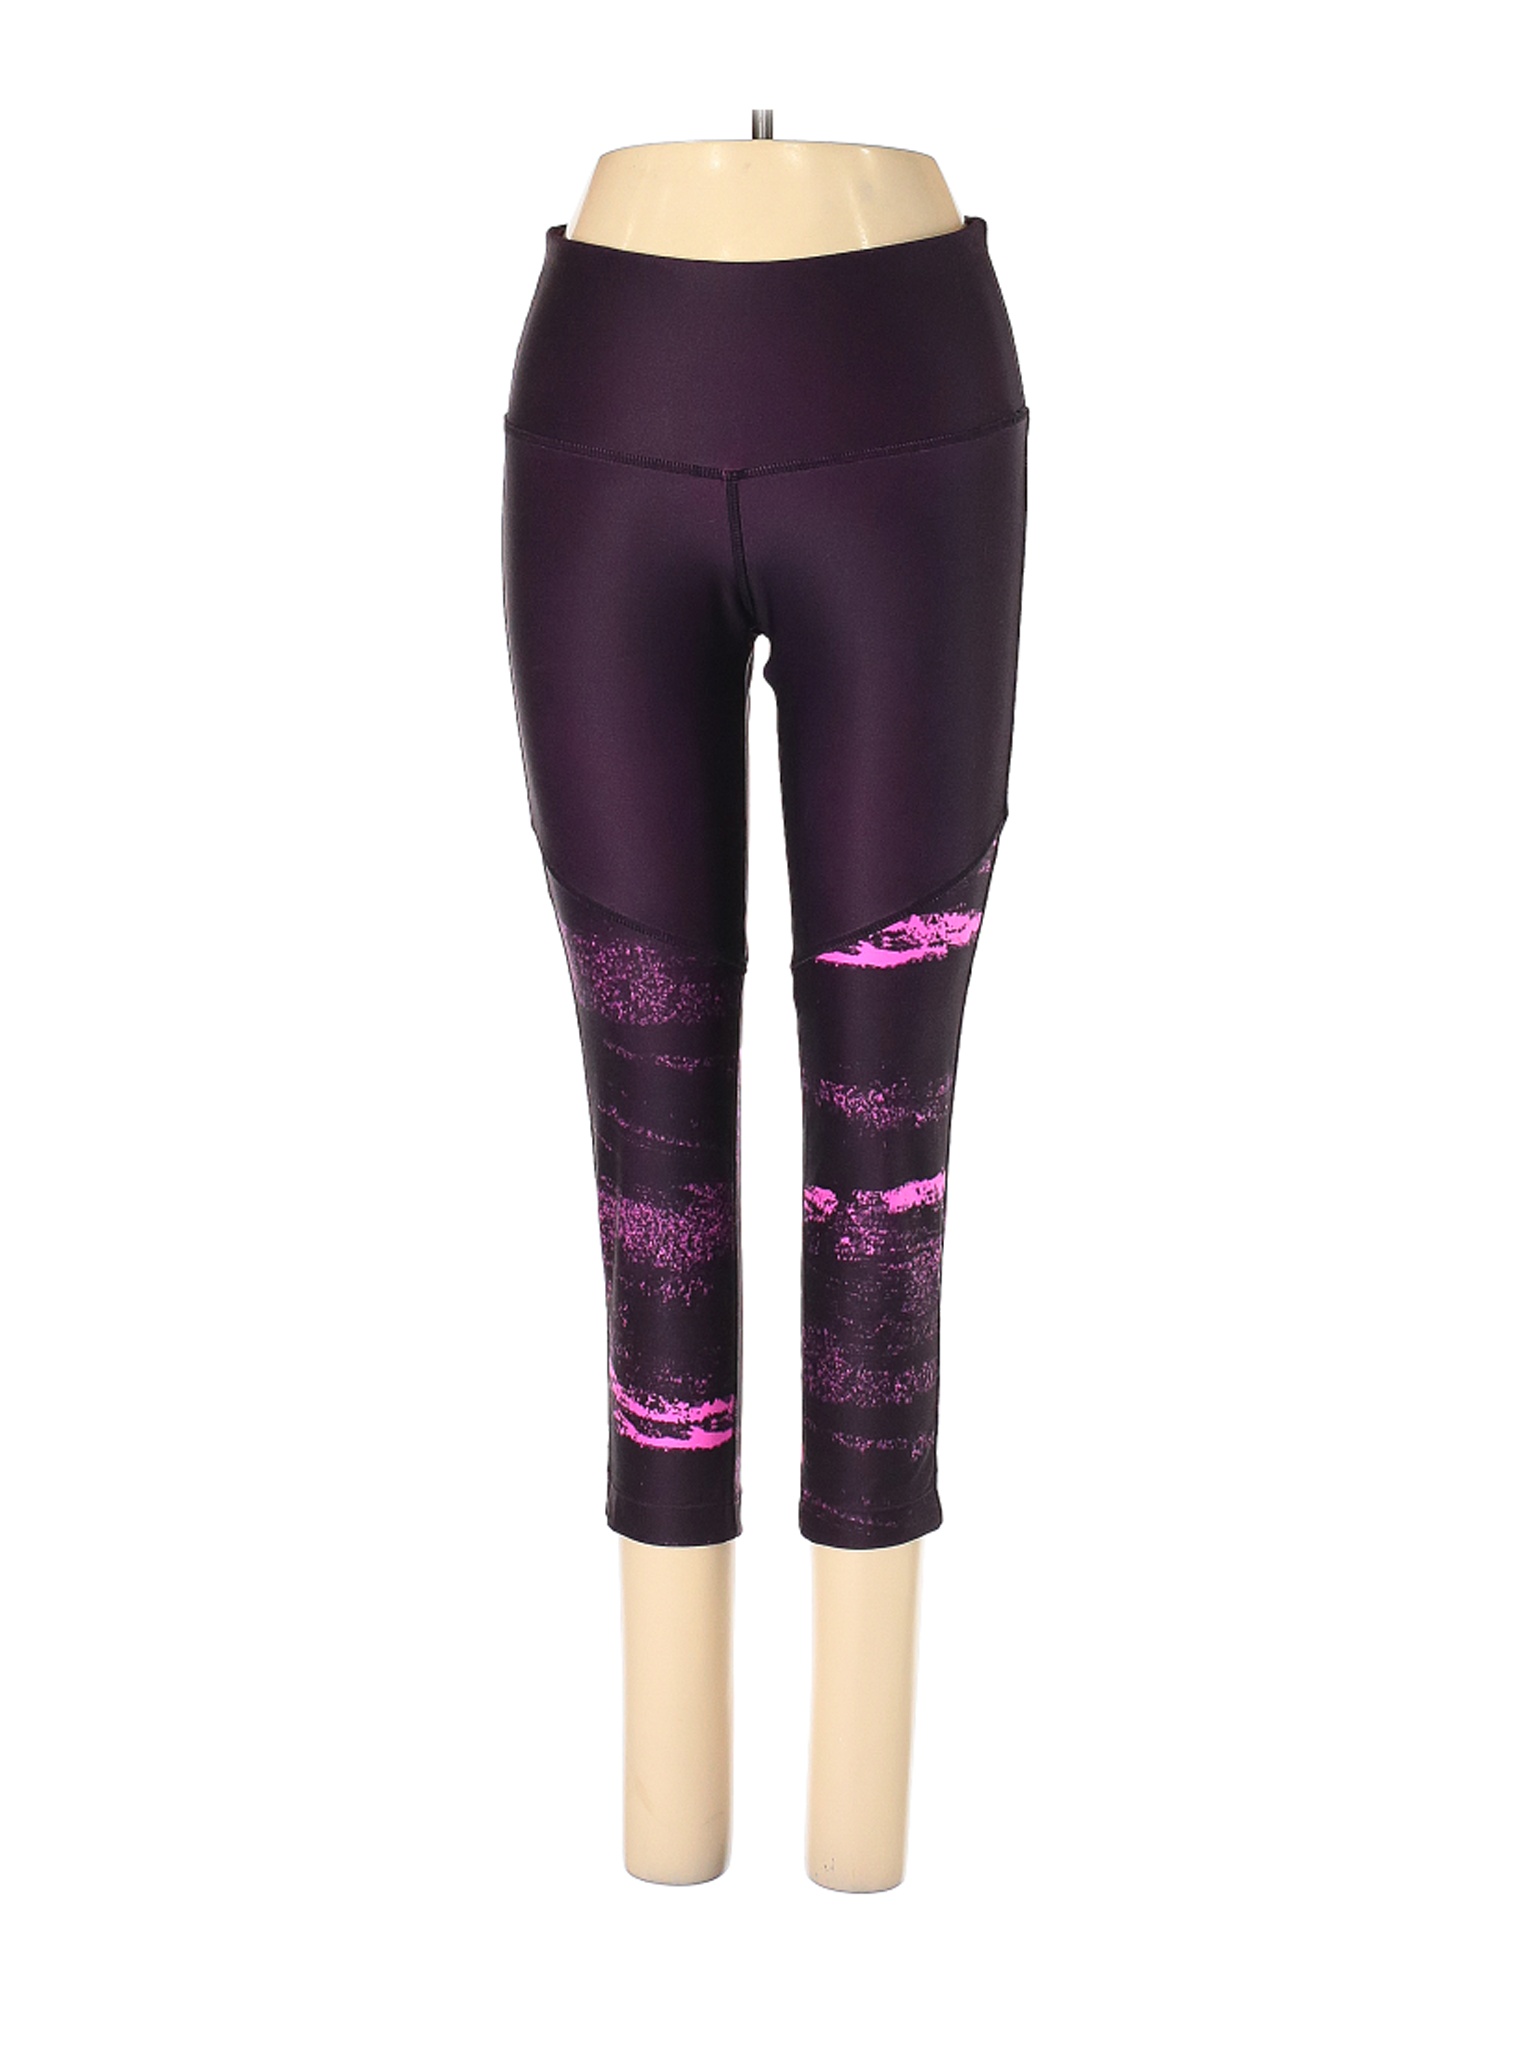 Mondetta Women Purple Active Pants S | eBay